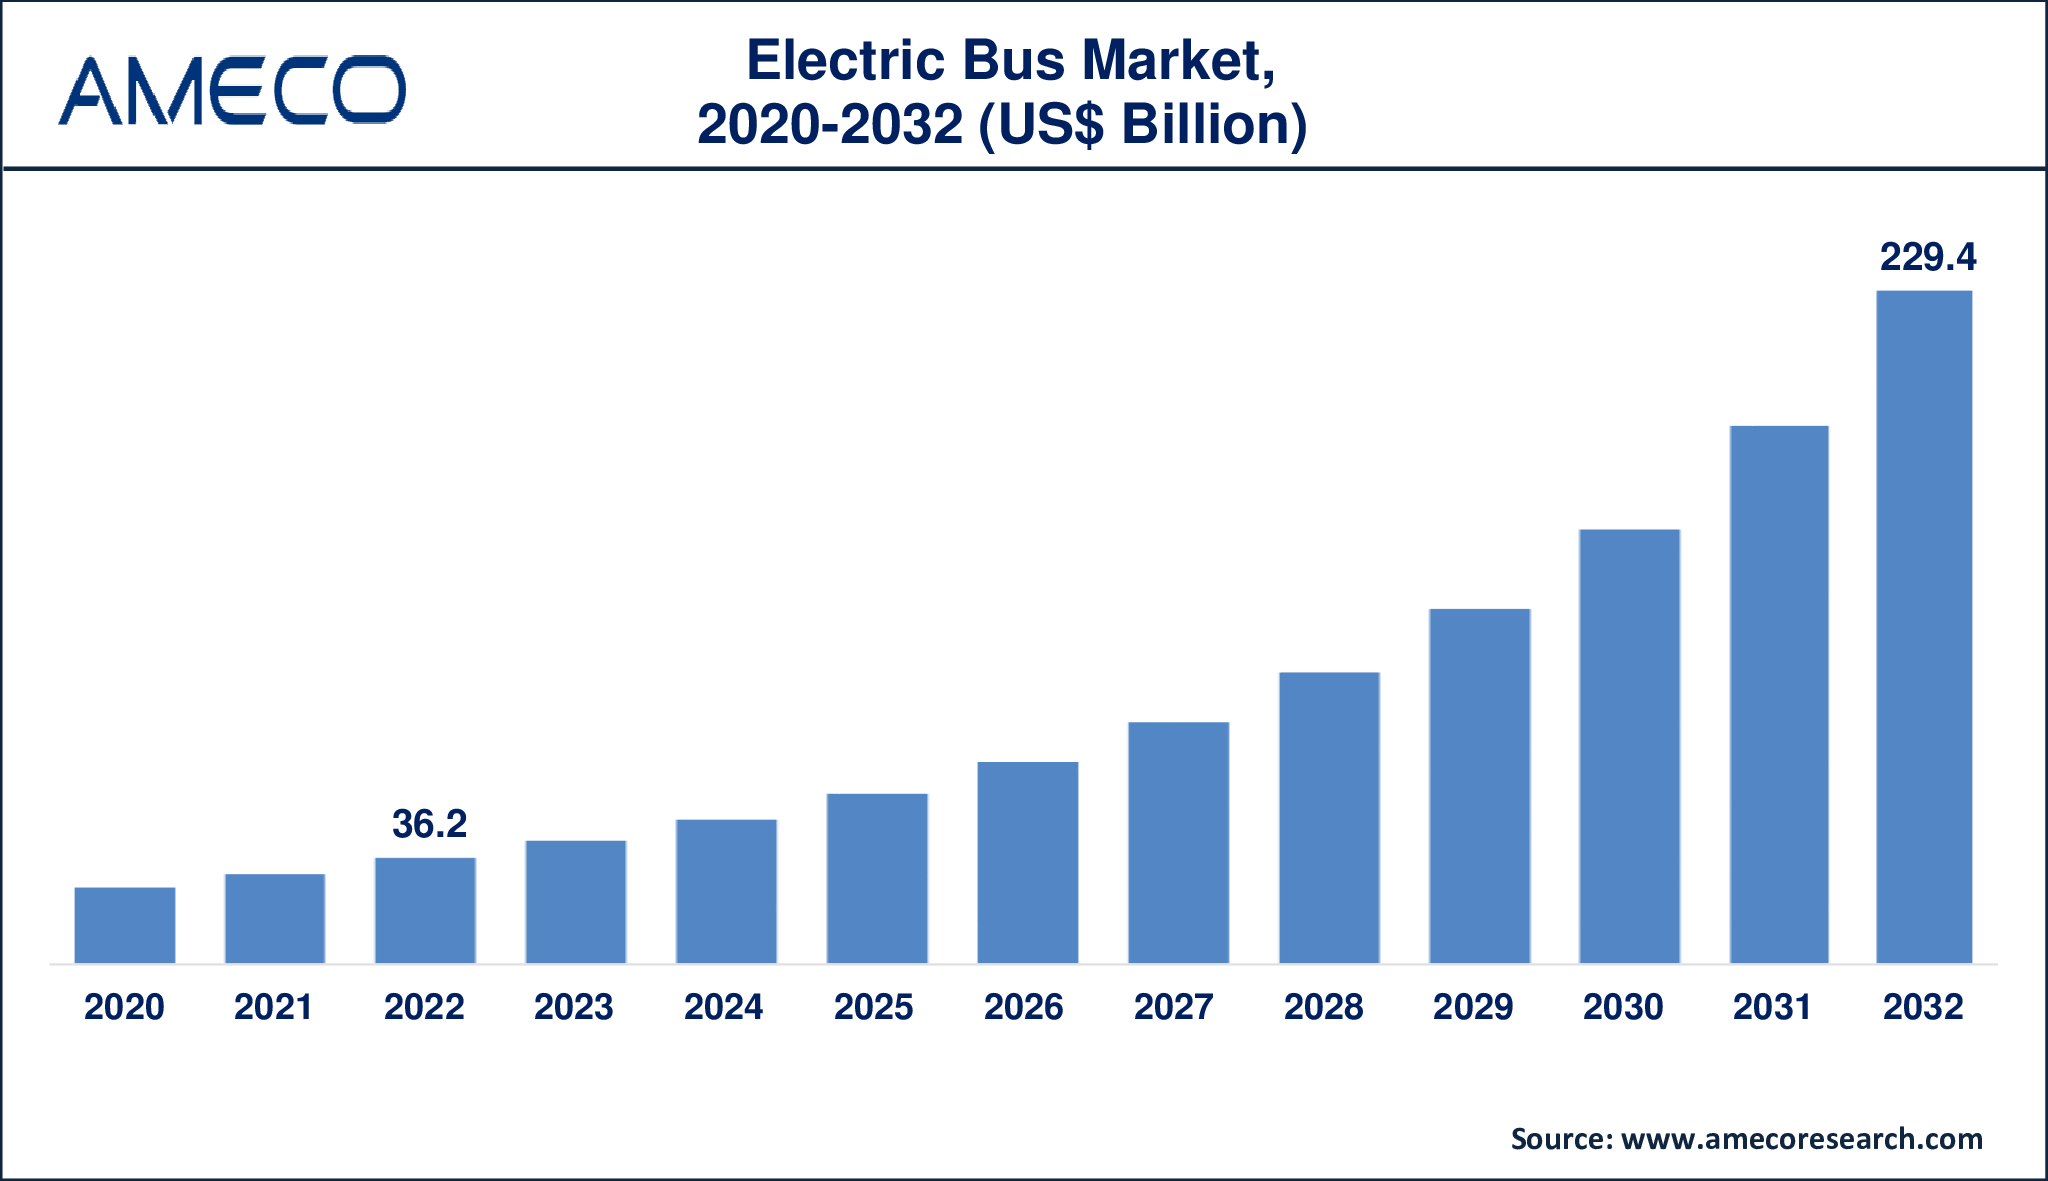 Electric Bus Market Dynamics